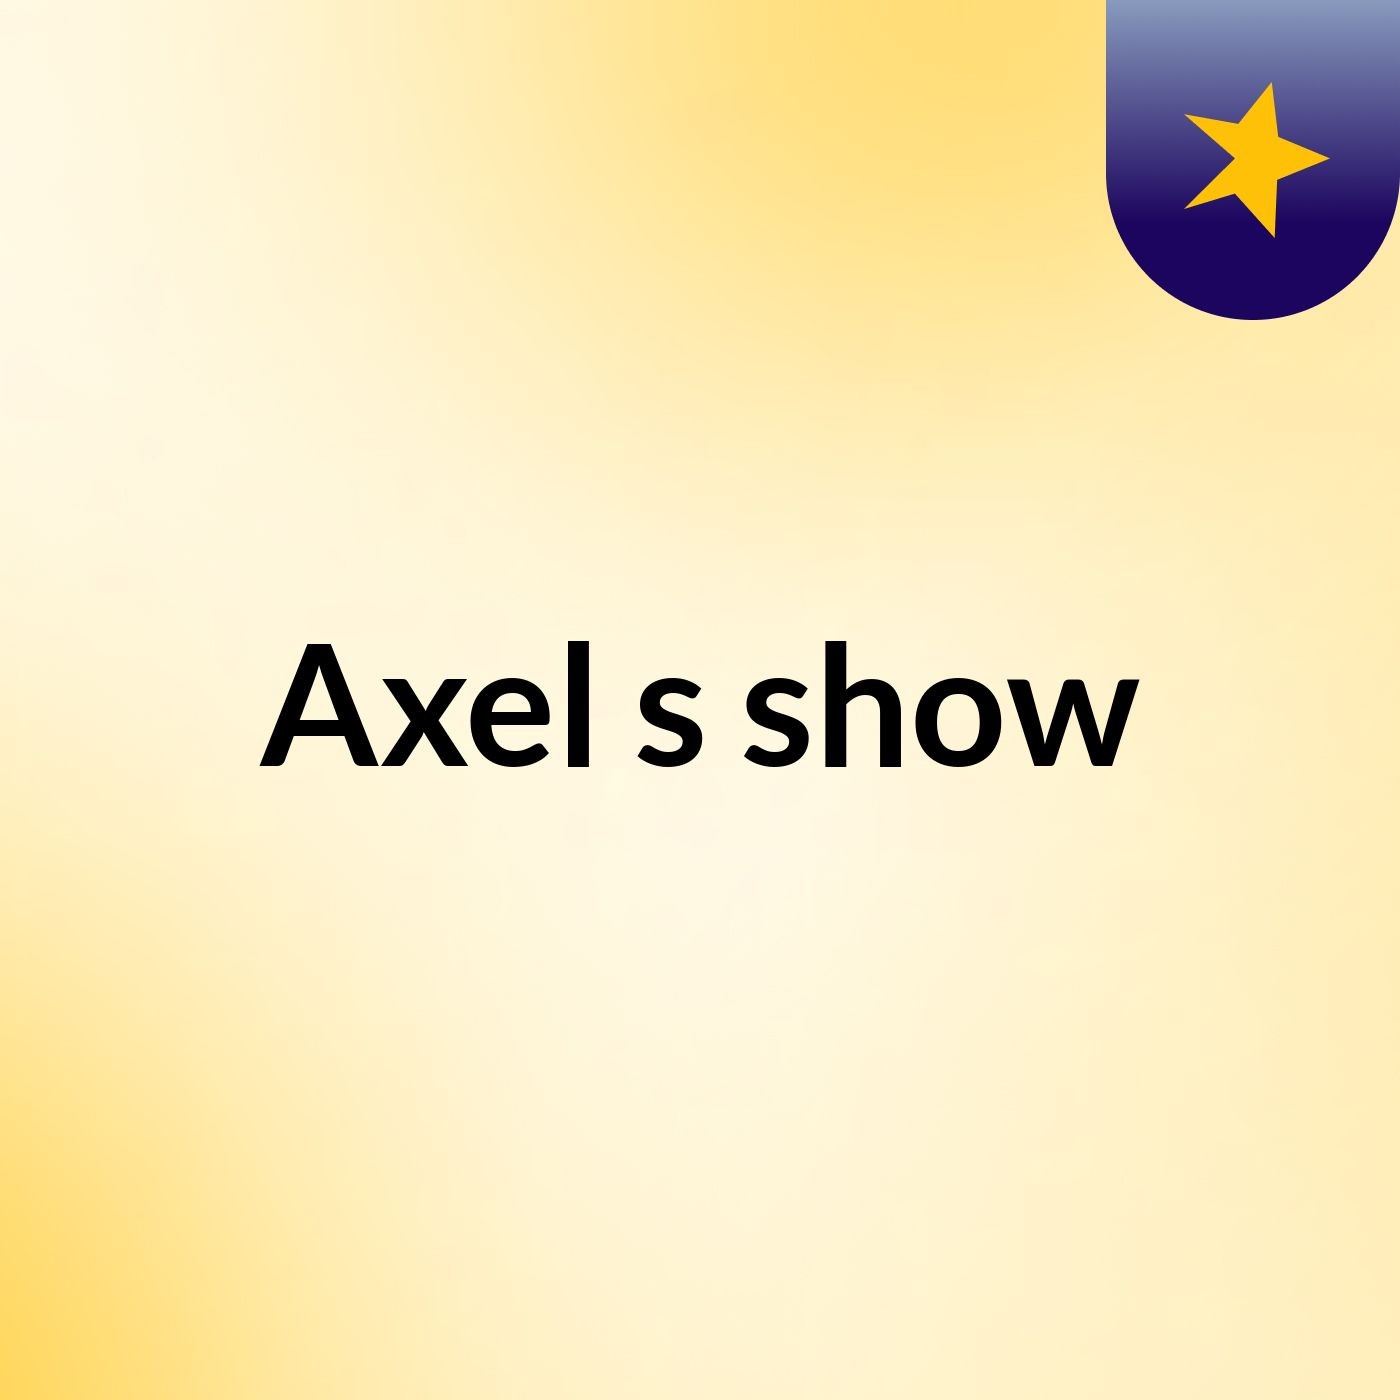 Axel's show